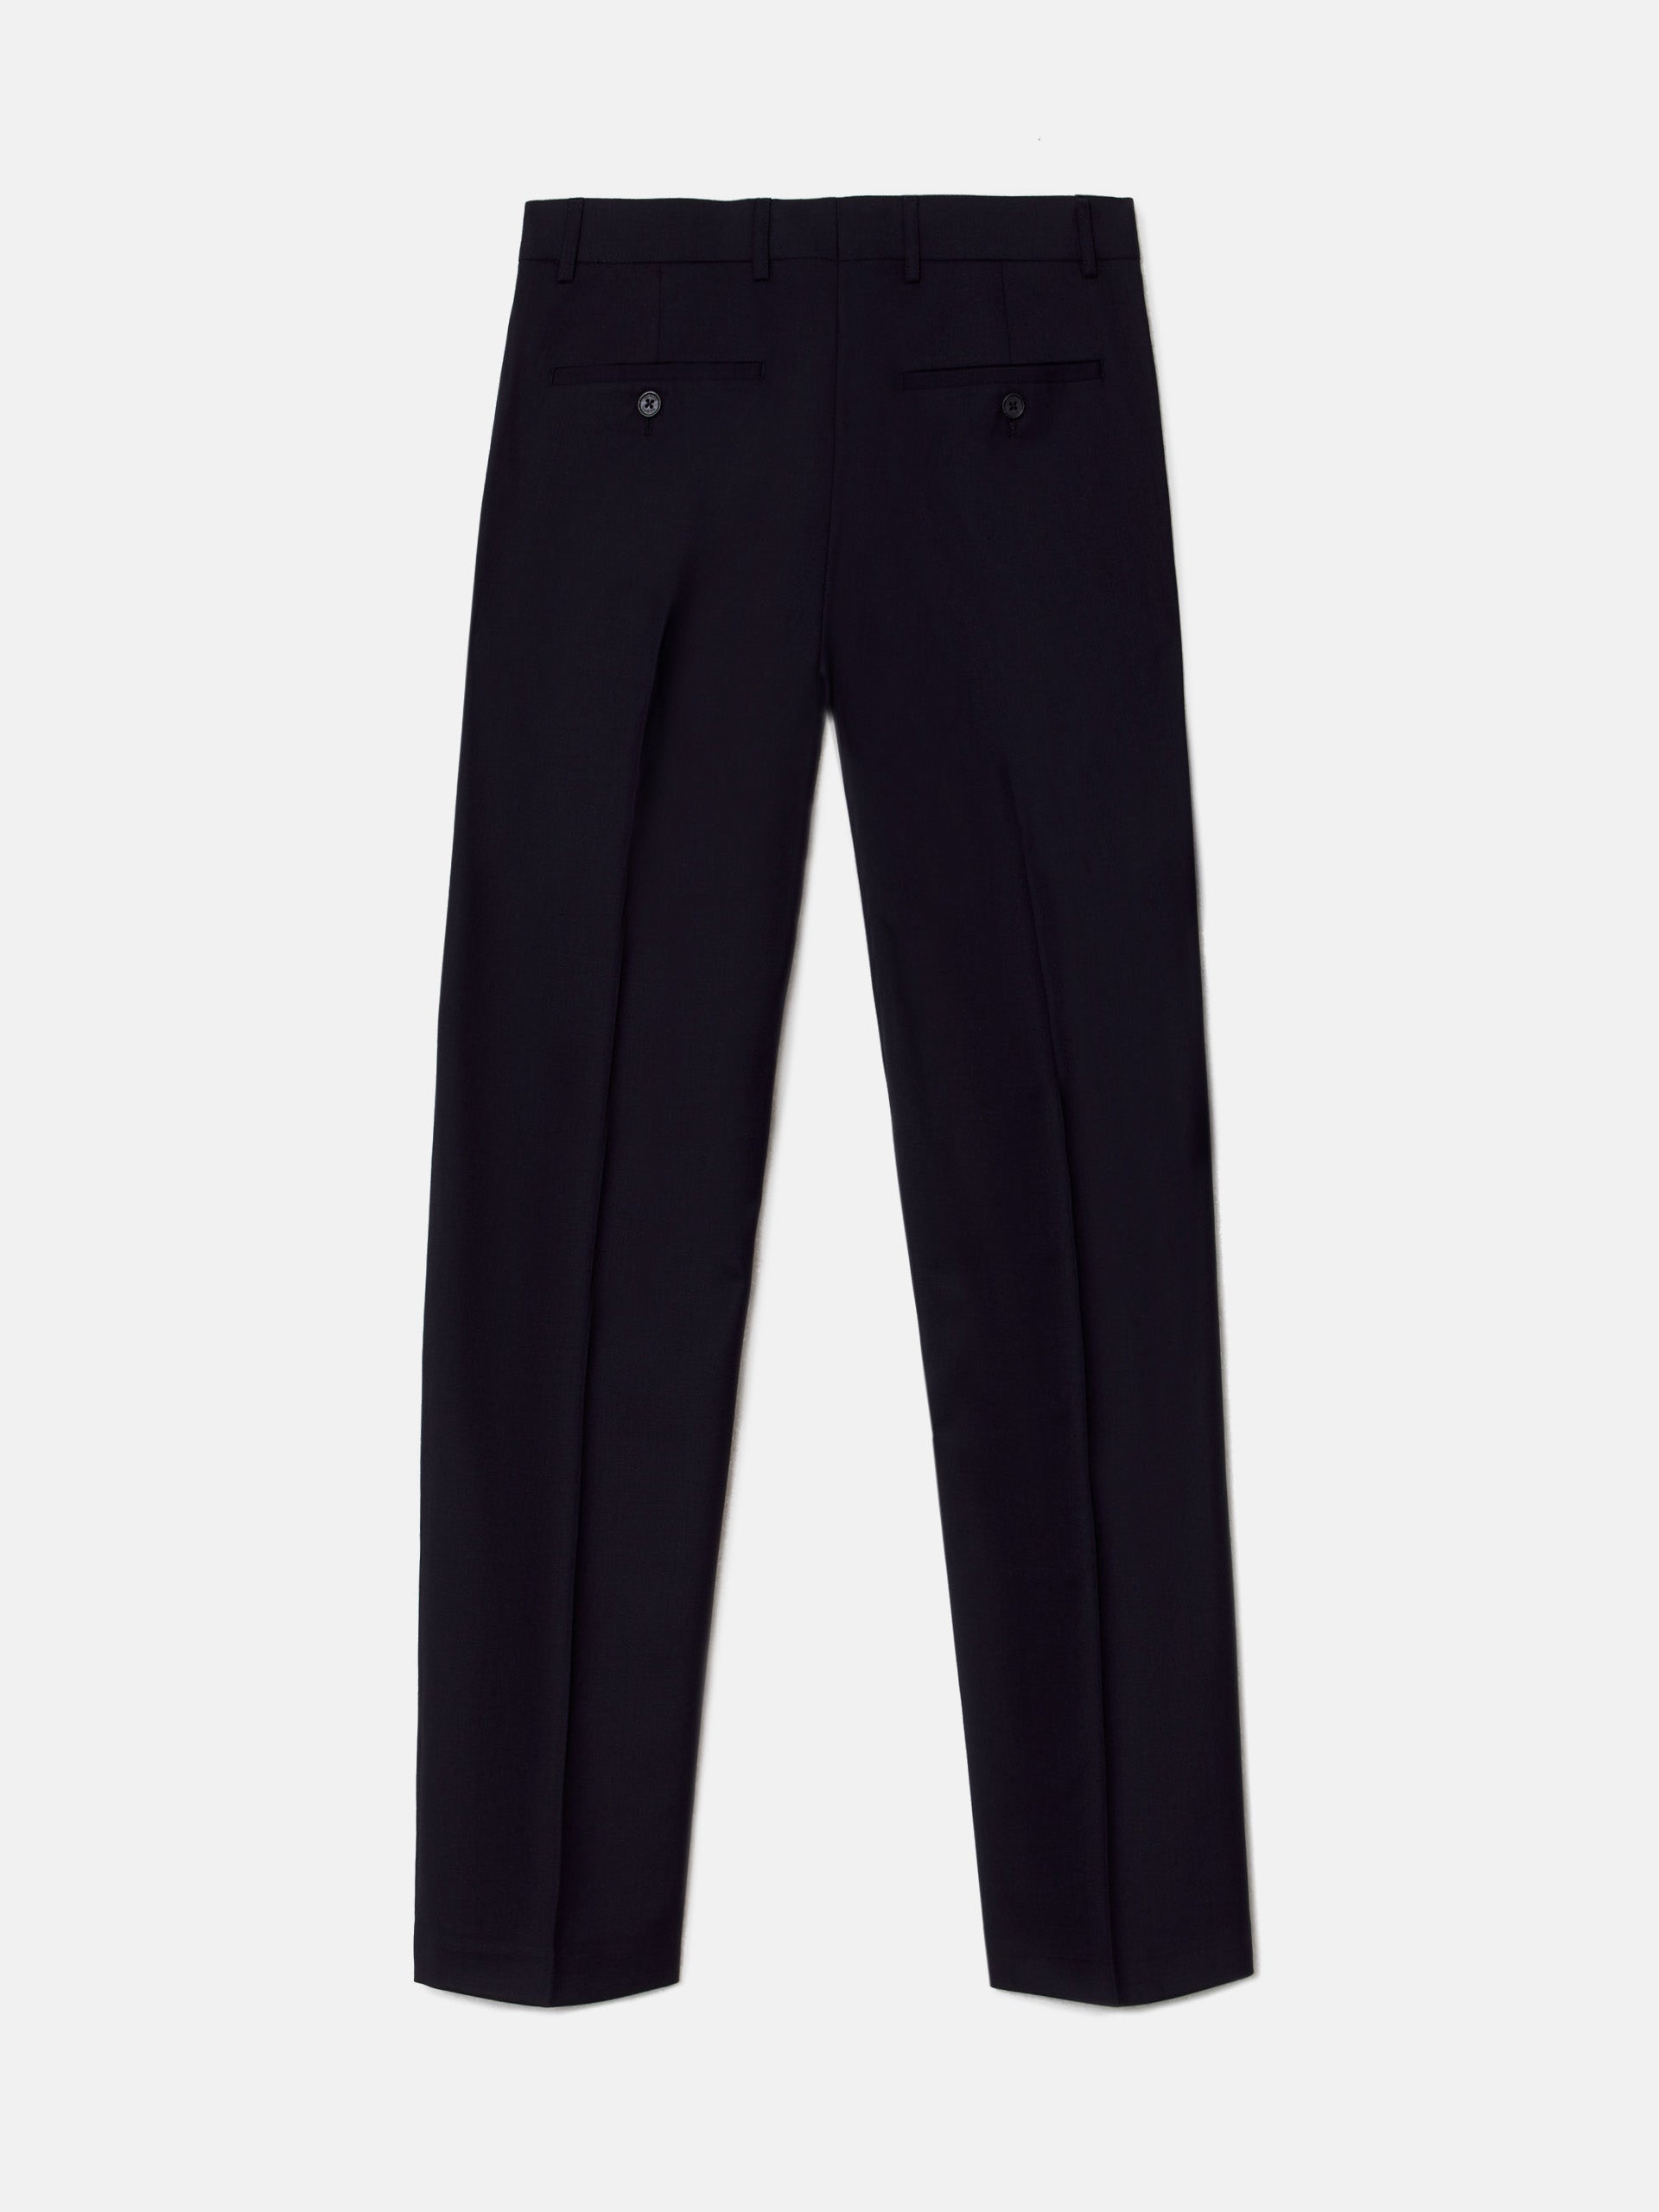 Pantalon traje natural stretch dark navy